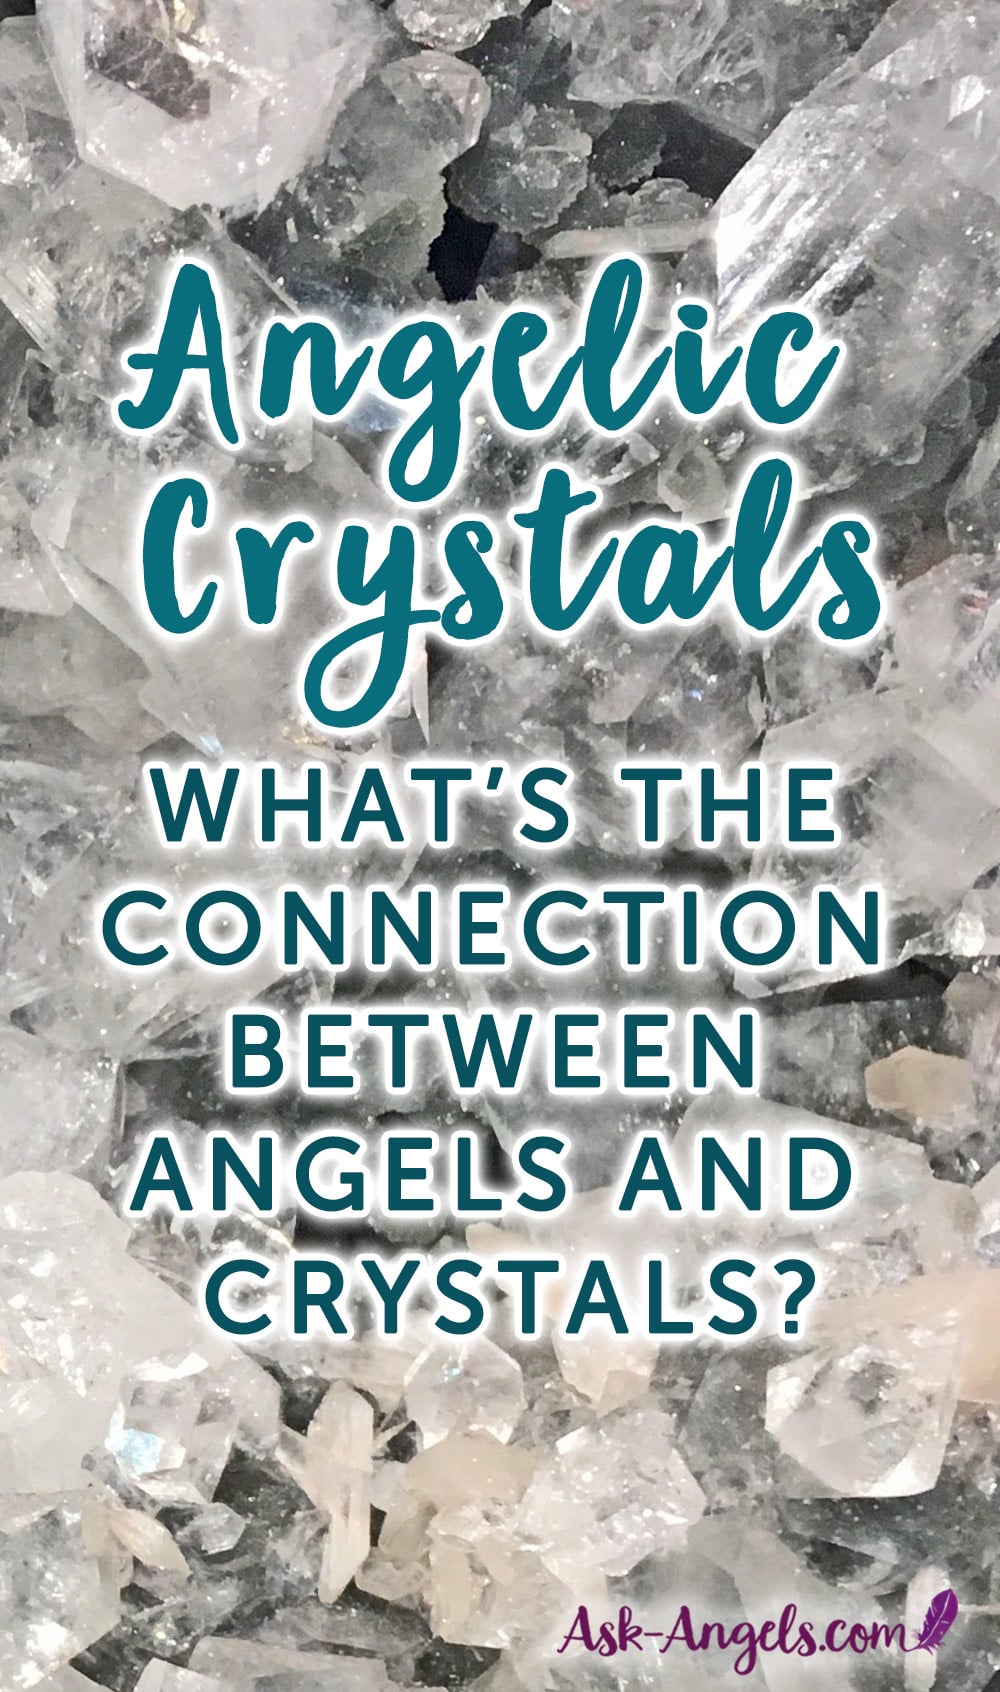 Angelic Crystals